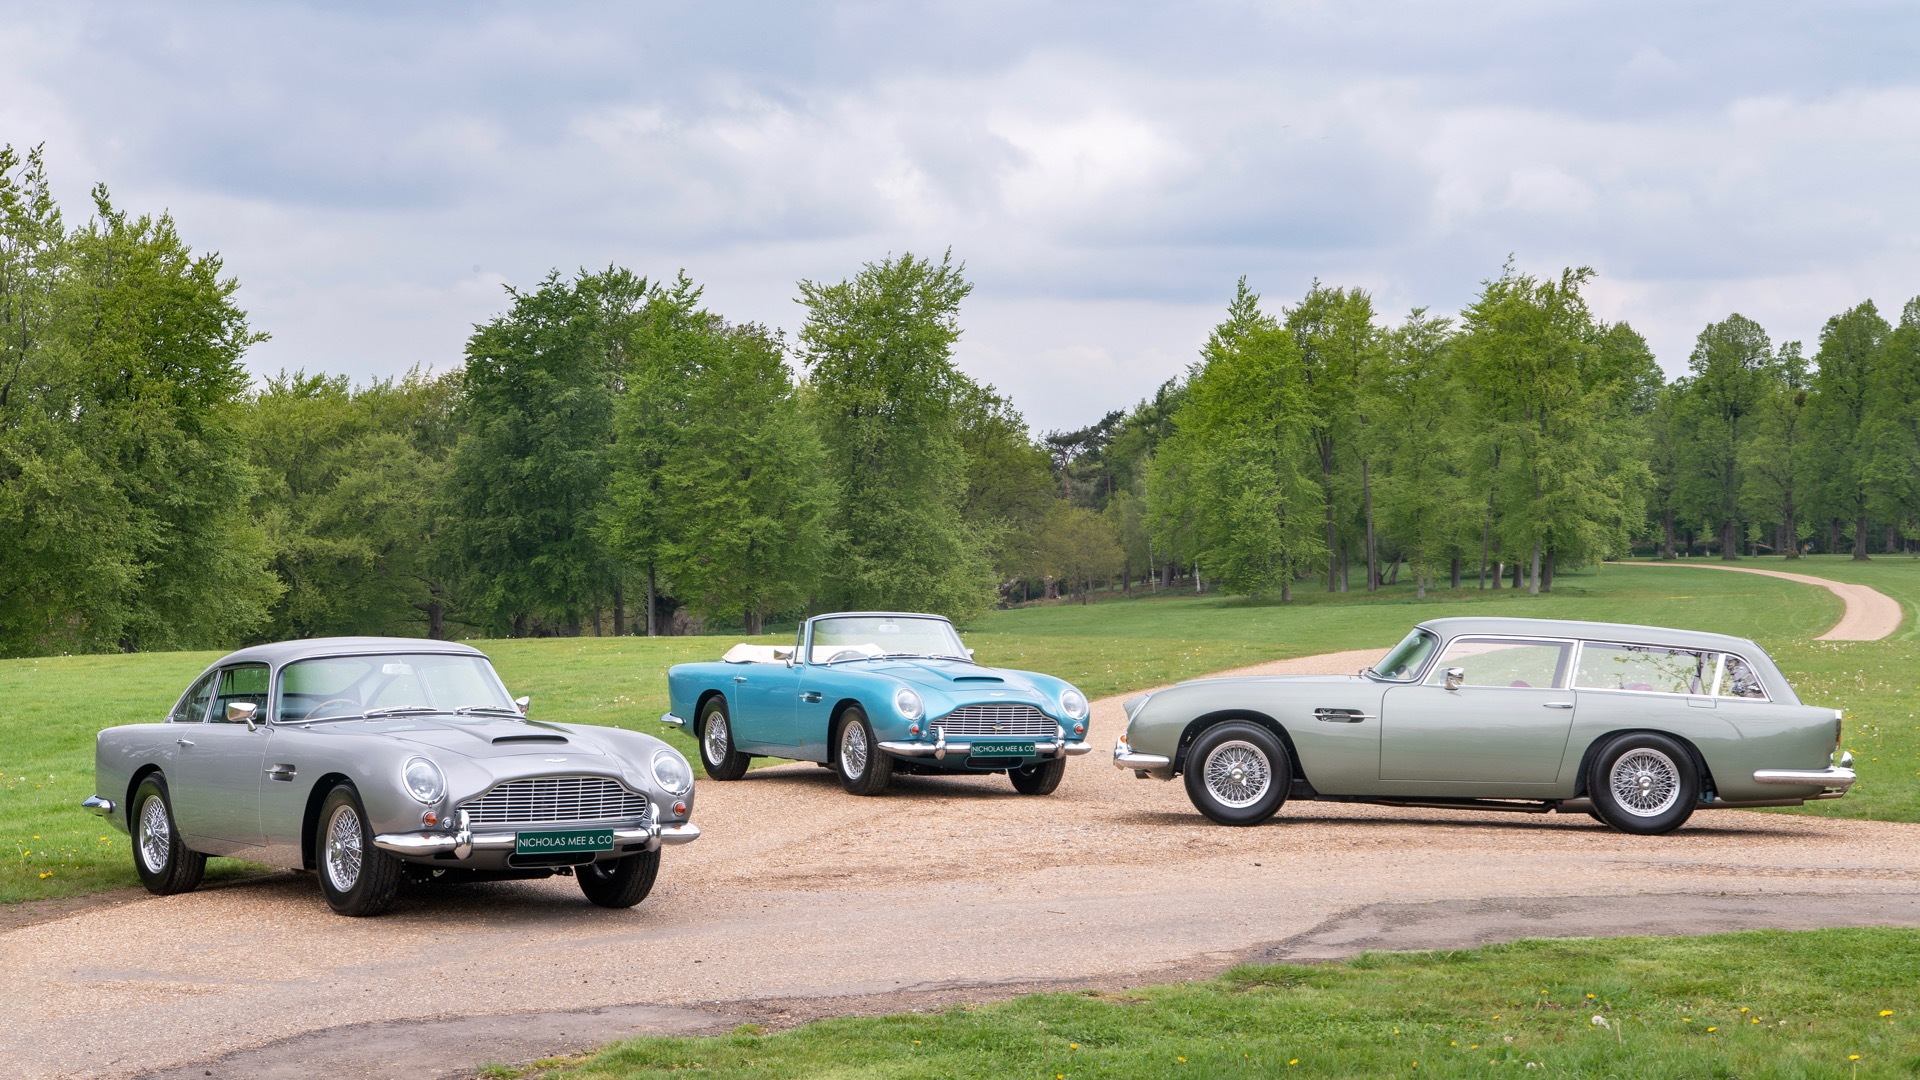 Aston Martin DB5 trio (Photo by Nicholas Mee & Co.)